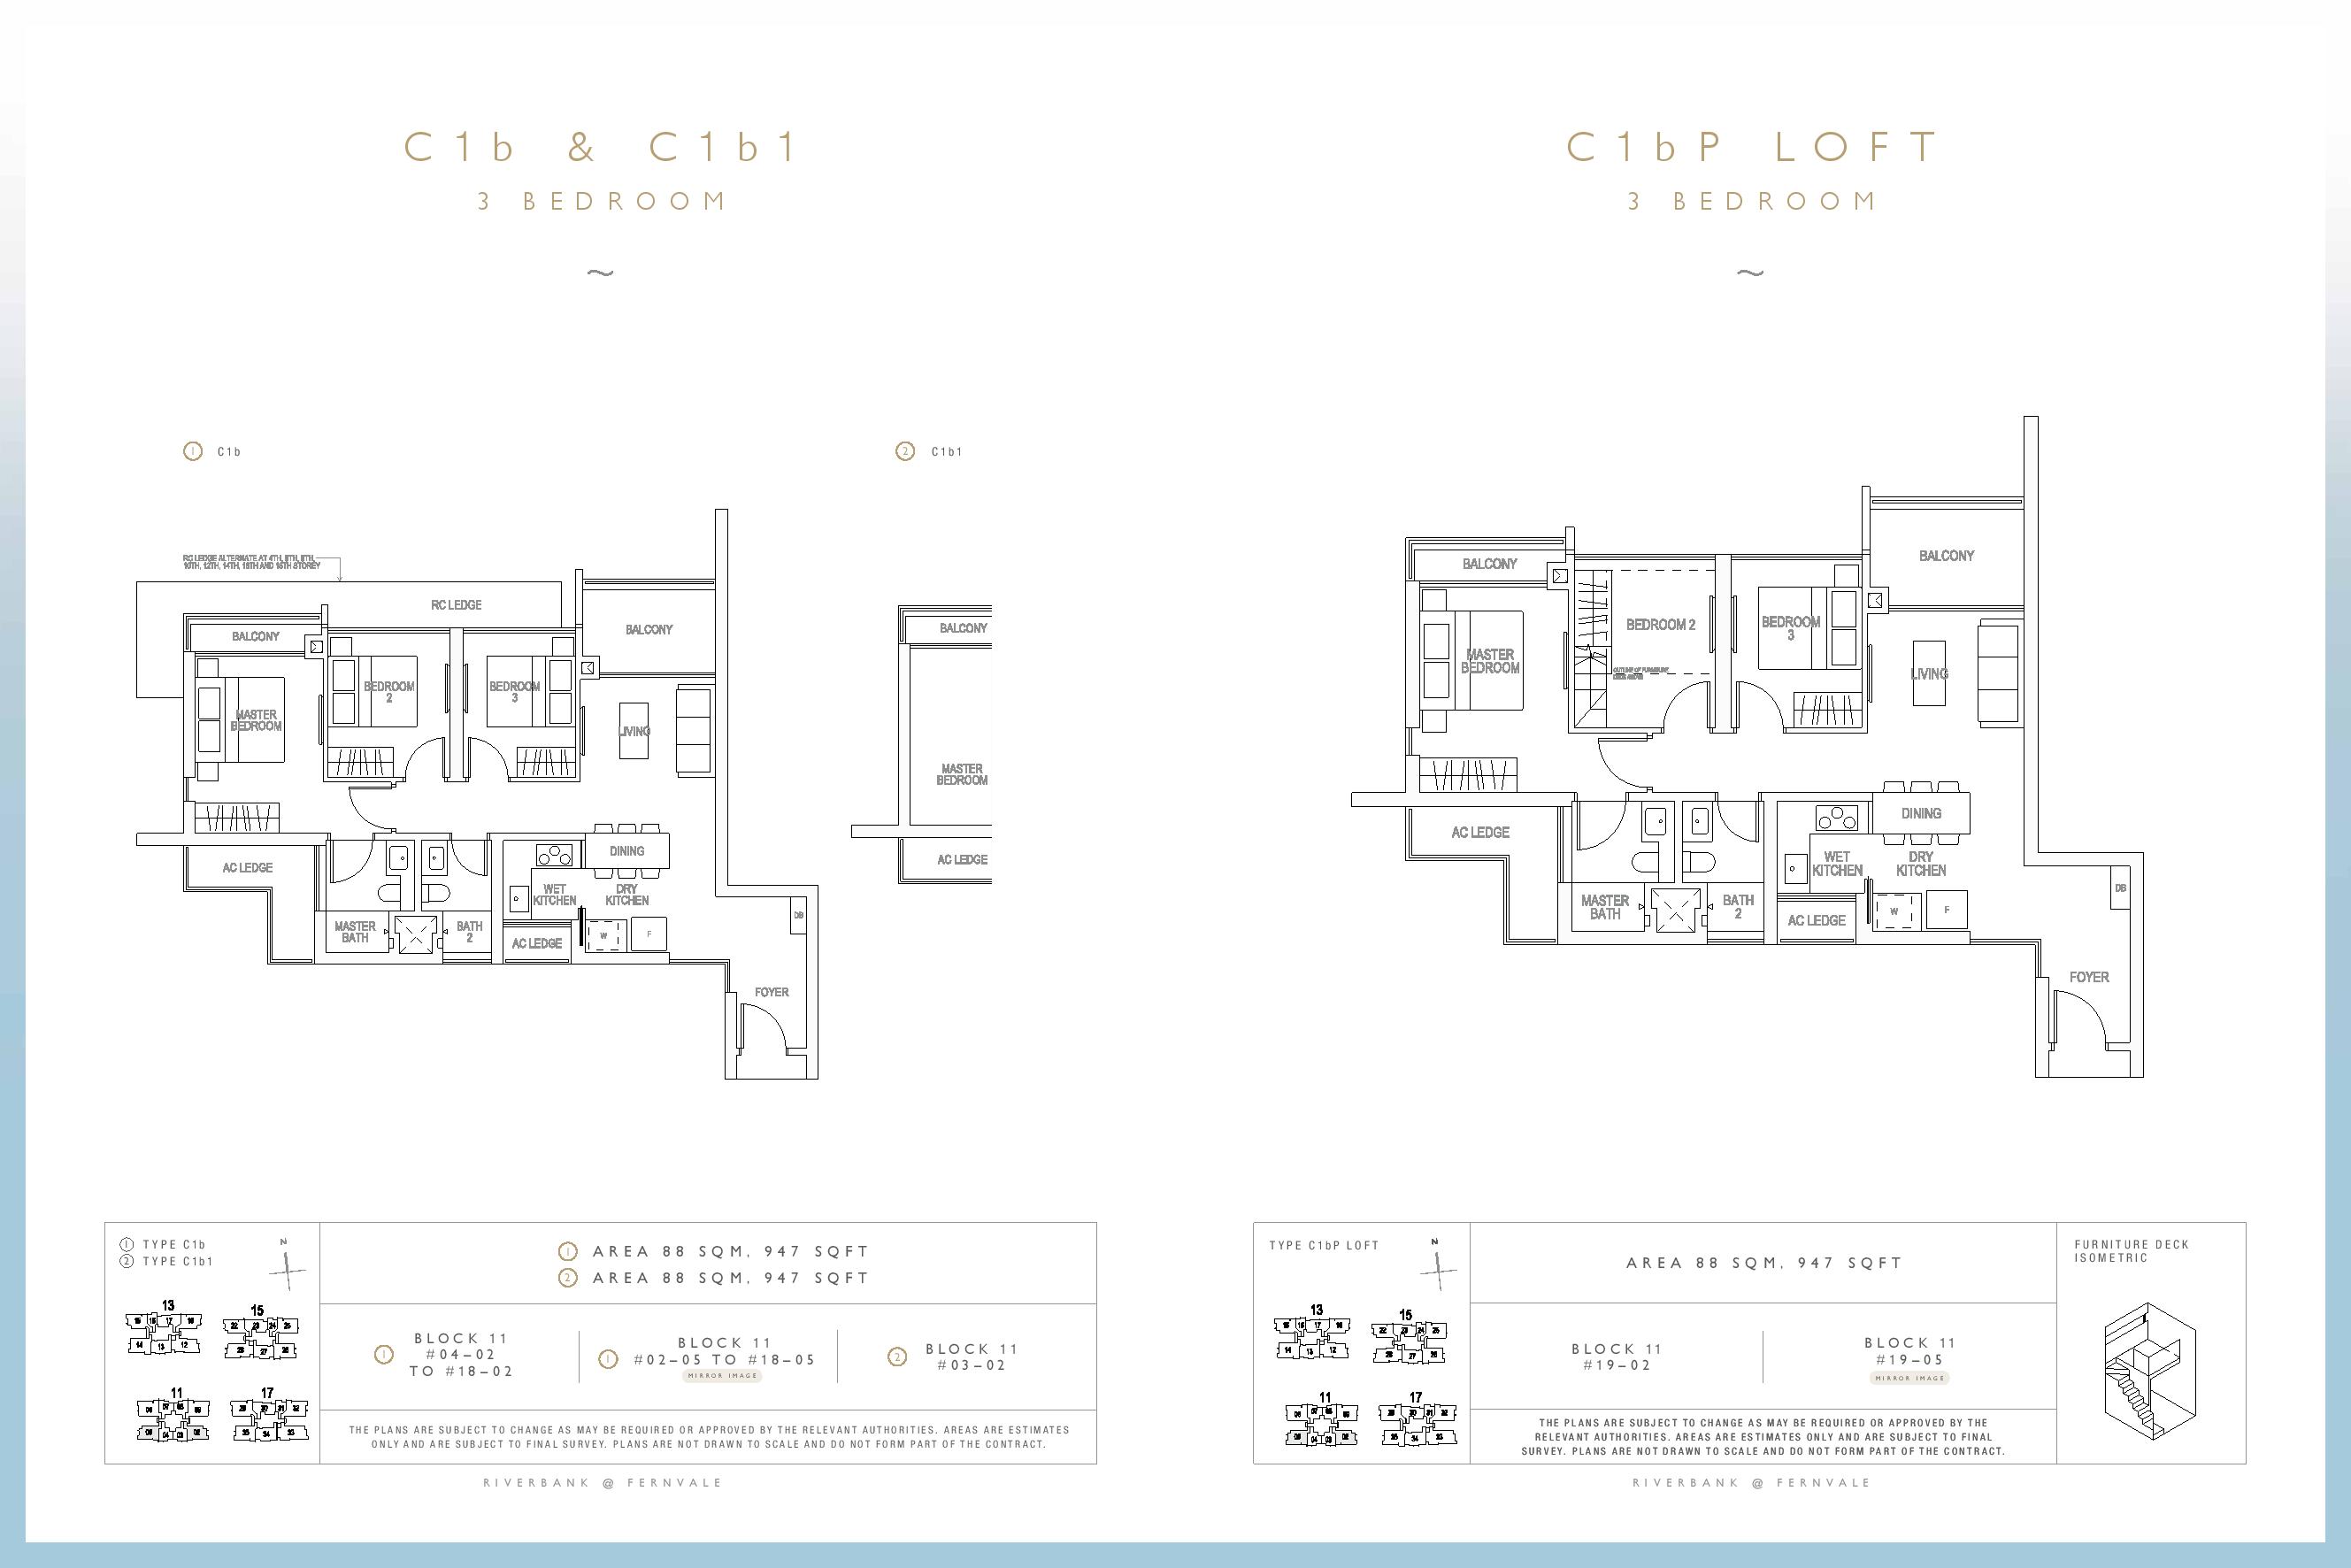 Riverbank @ Fernvale 3 Bedroom Type C1b, C1b1, C1bP Loft Floor Plan